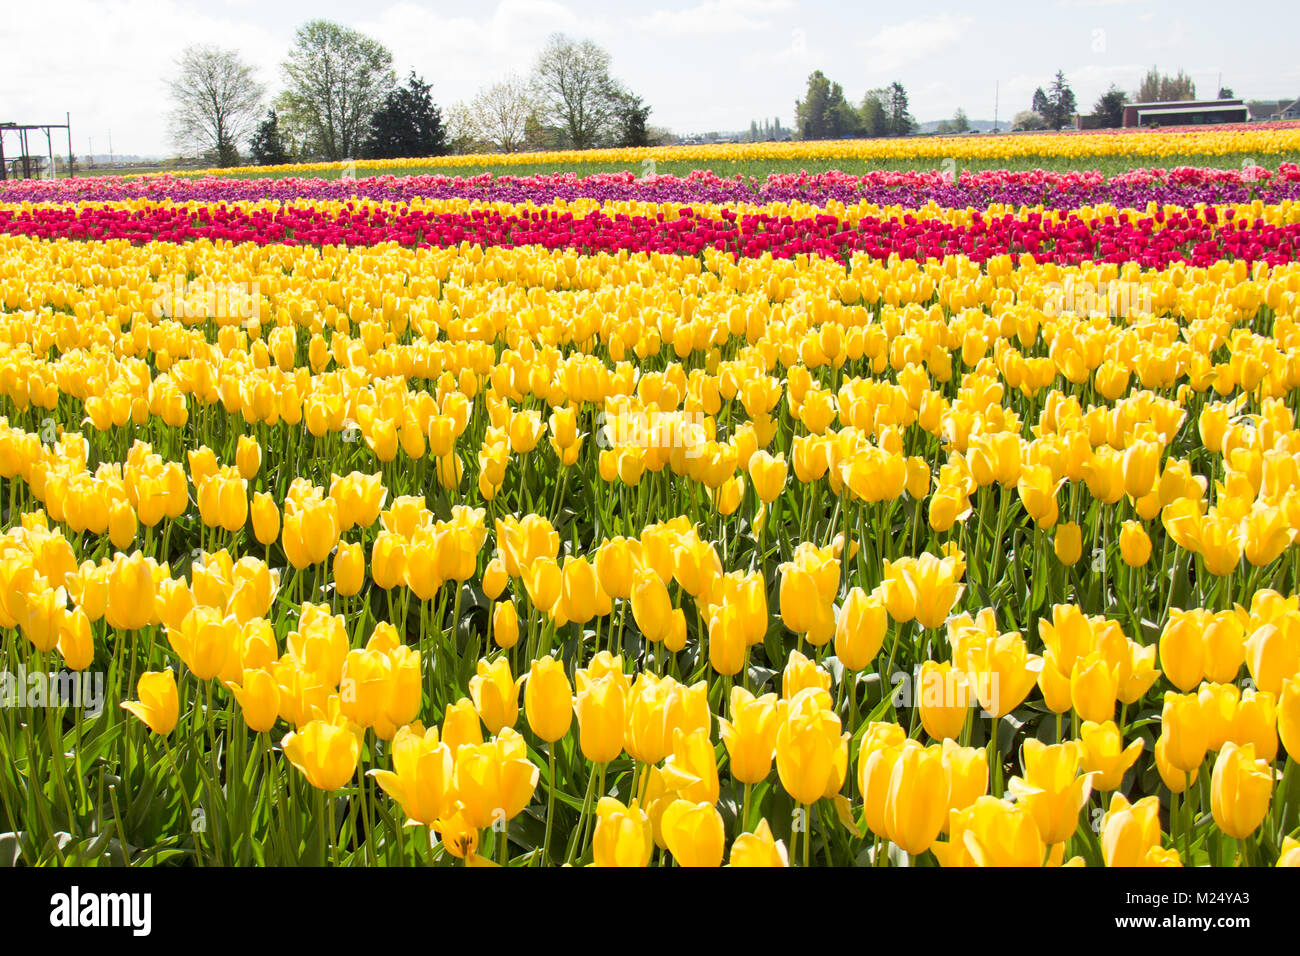 Skagit valley tulip festival in Mount Vernon Washington State. Stock Photo